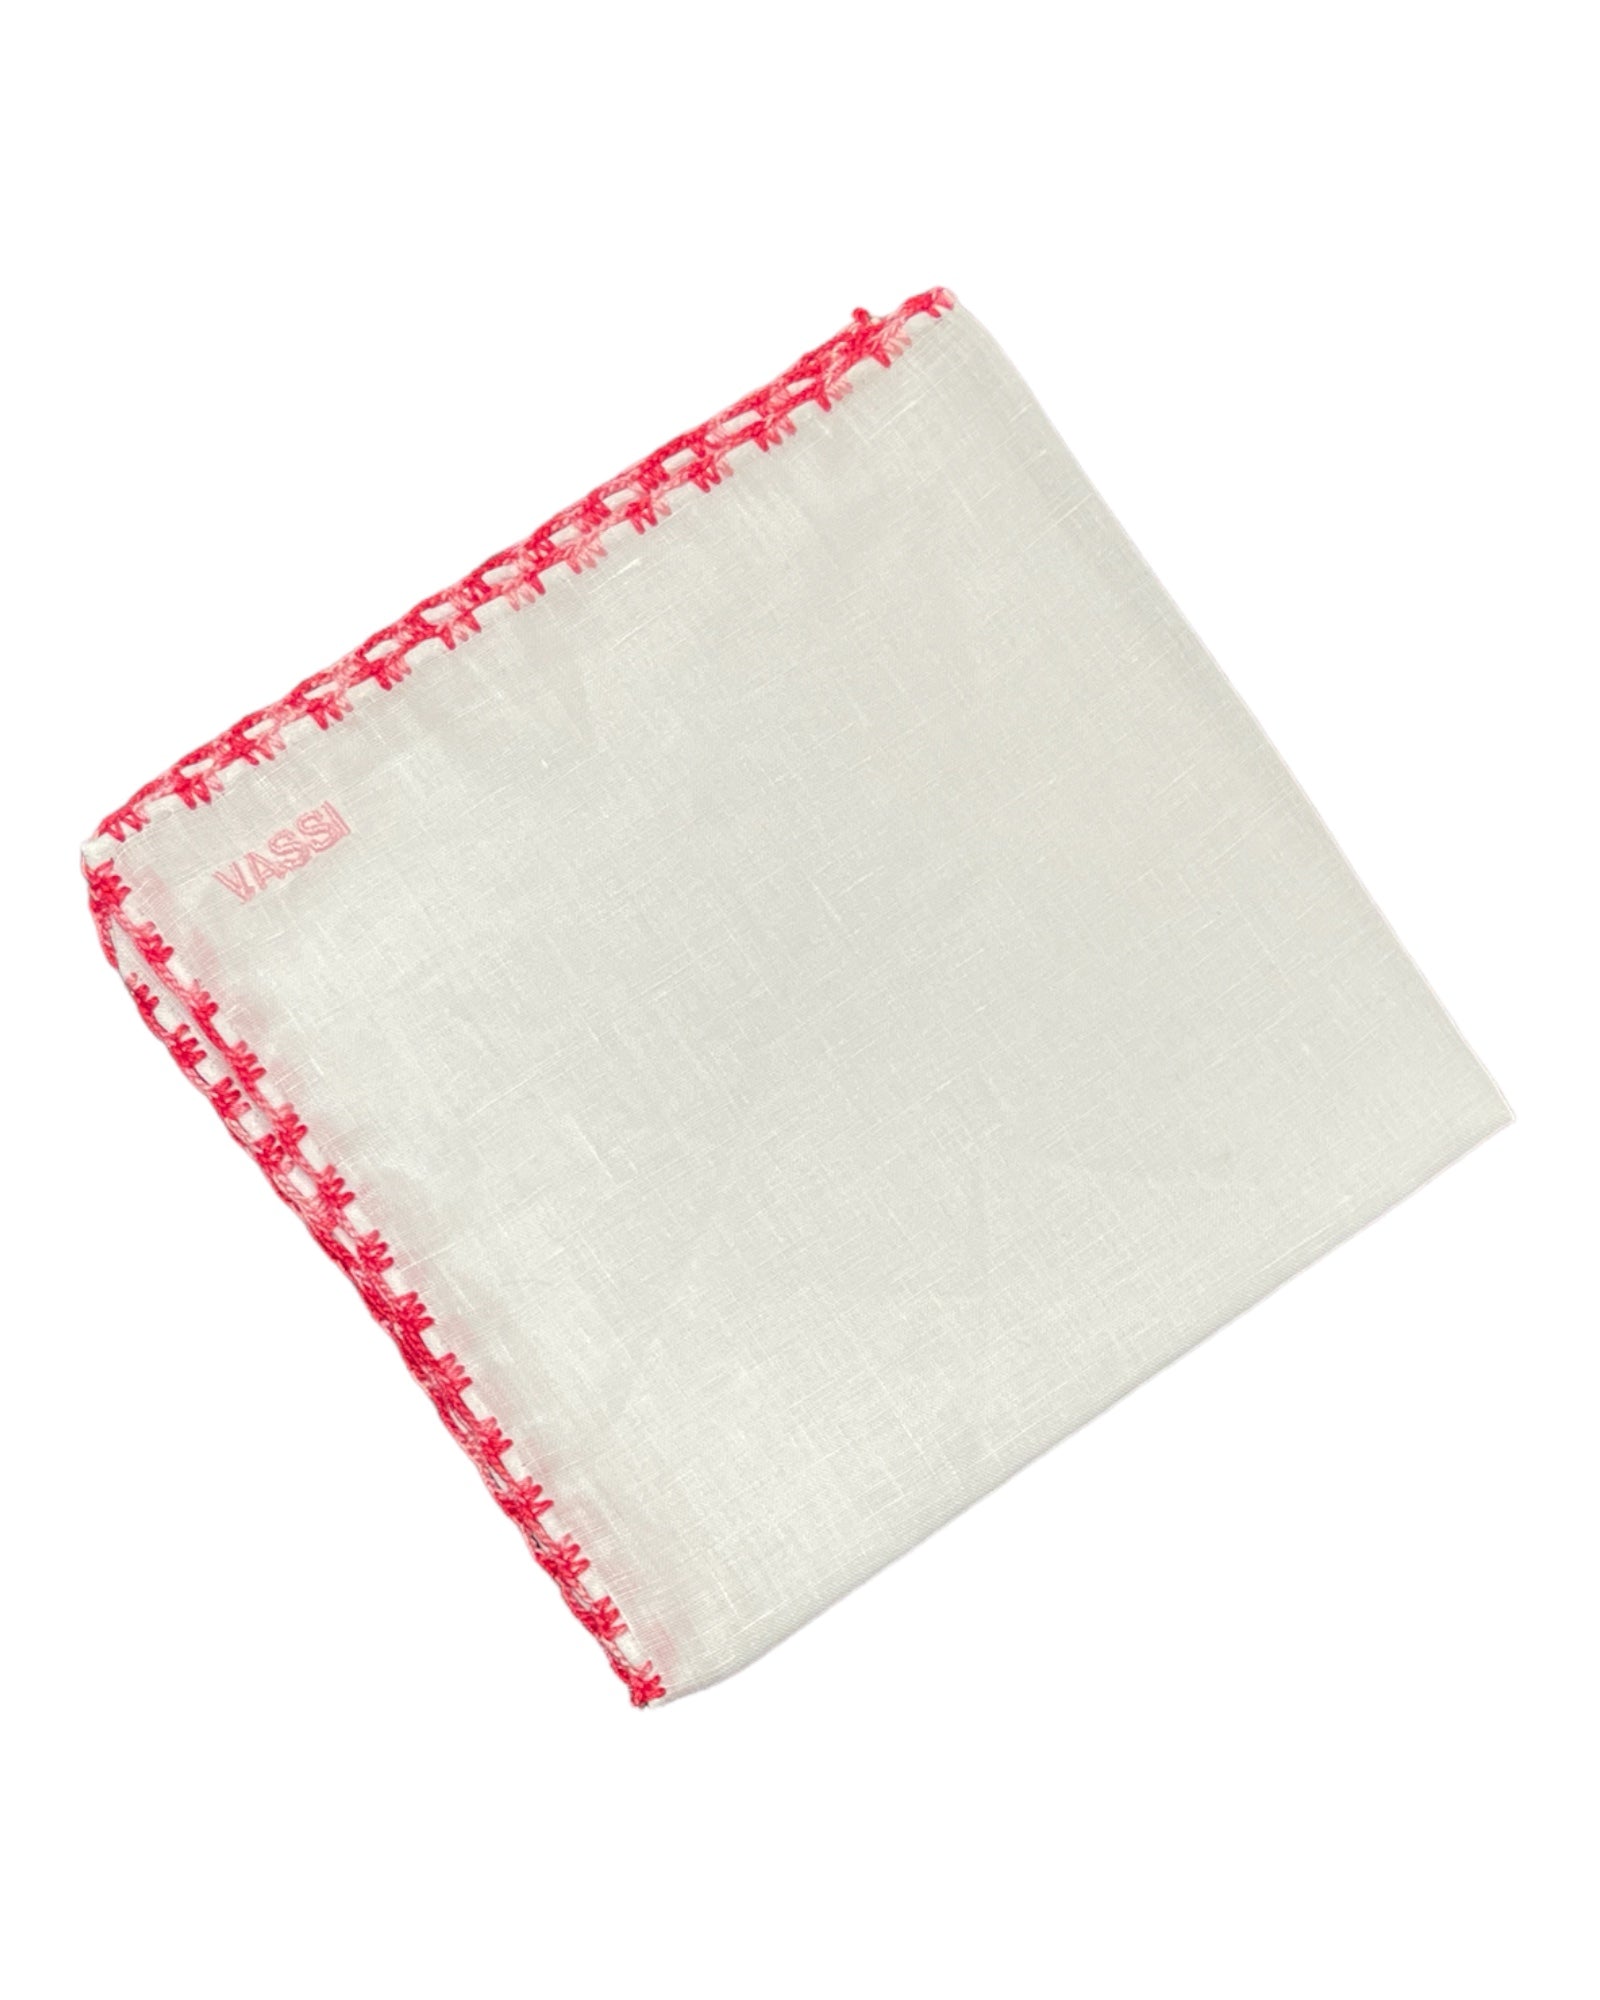 White Linen Pocket Square With Handrolled Triple V- Stitch Pocket SquareFuchsia-Pink